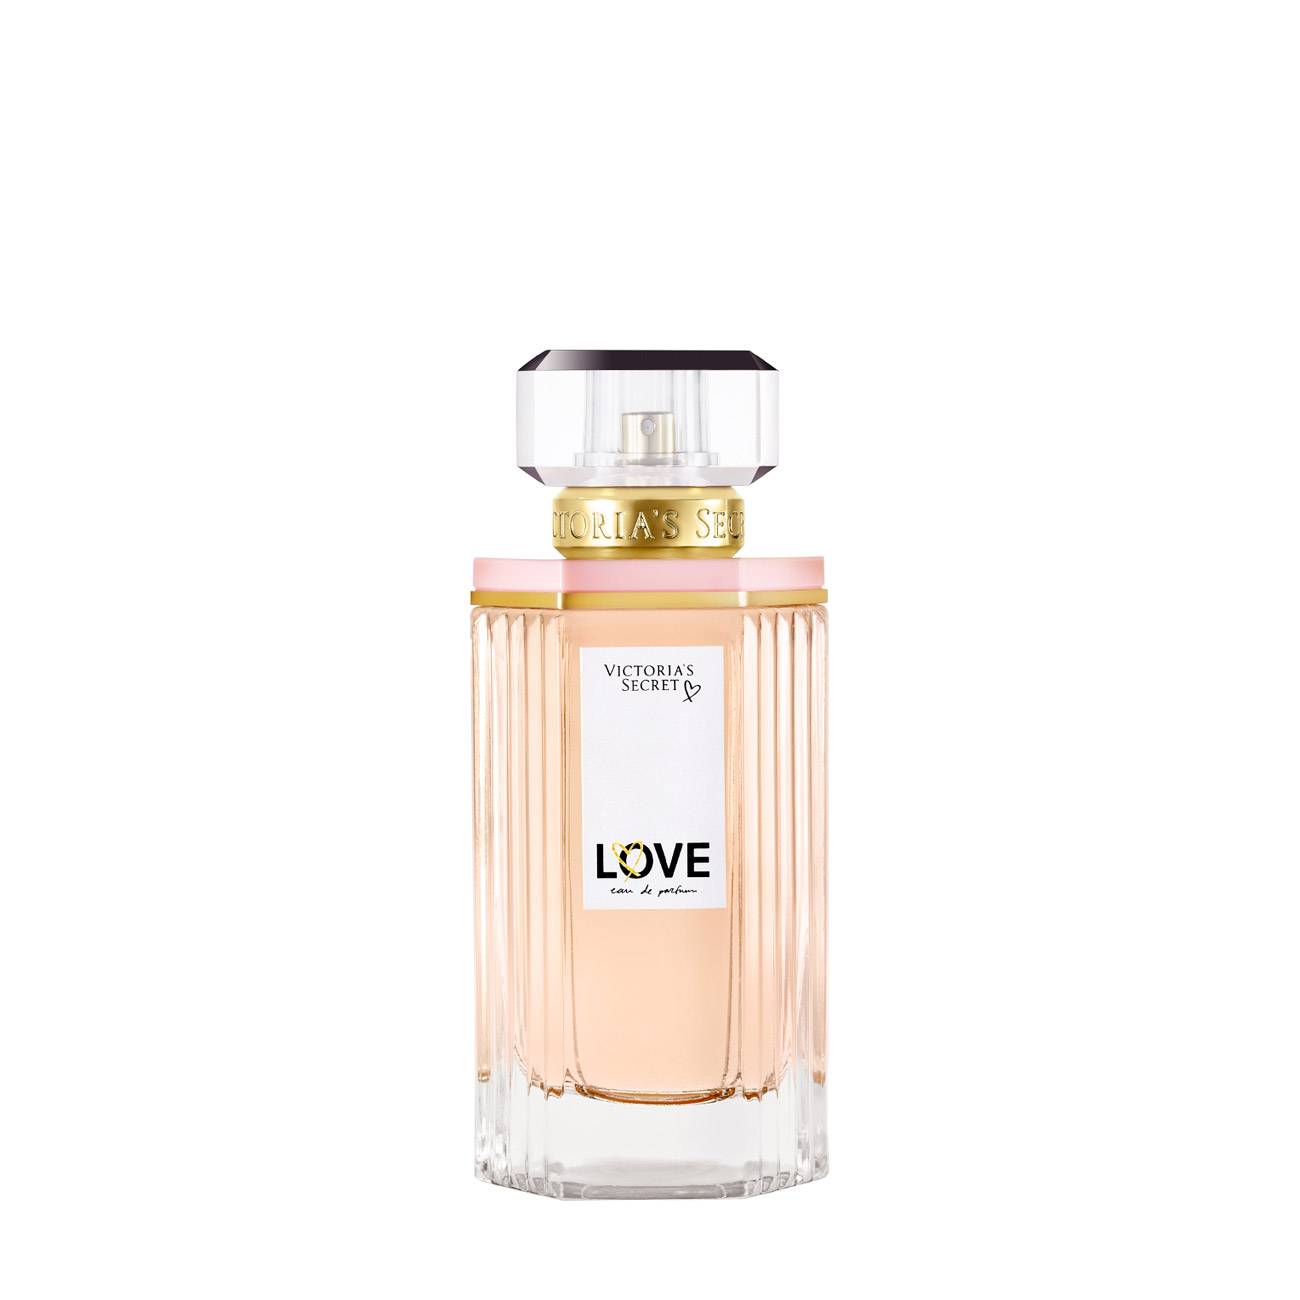 Apa de Parfum Victoria's Secret LOVE 50ml cu comanda online